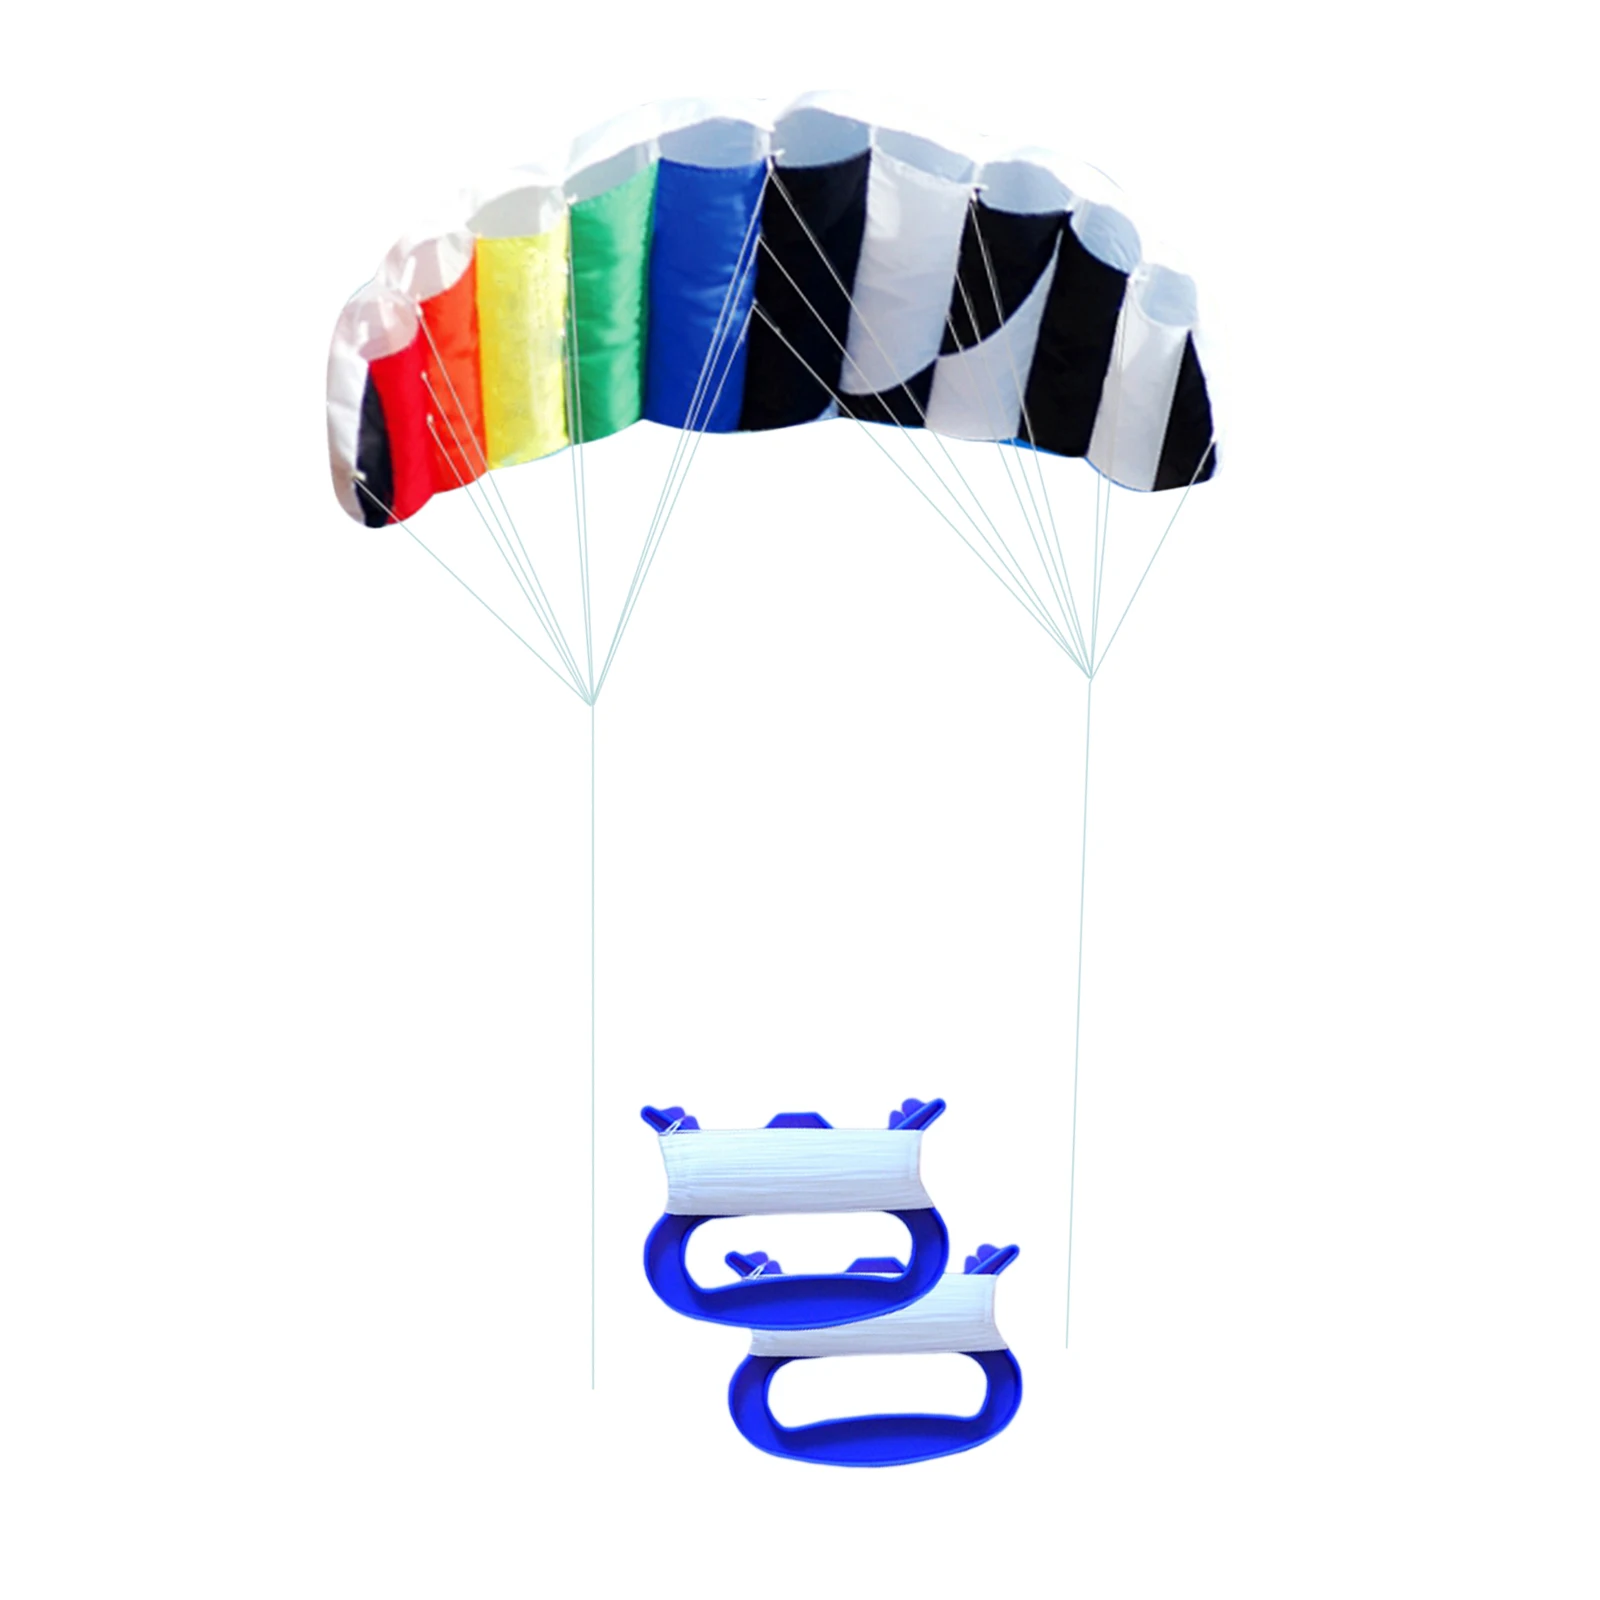 

Inflatable Stunt Power Kite Portable Dual-Line Kitesurfing Kiteboarding Training Parafoil Coast Parachute with Flying Lines